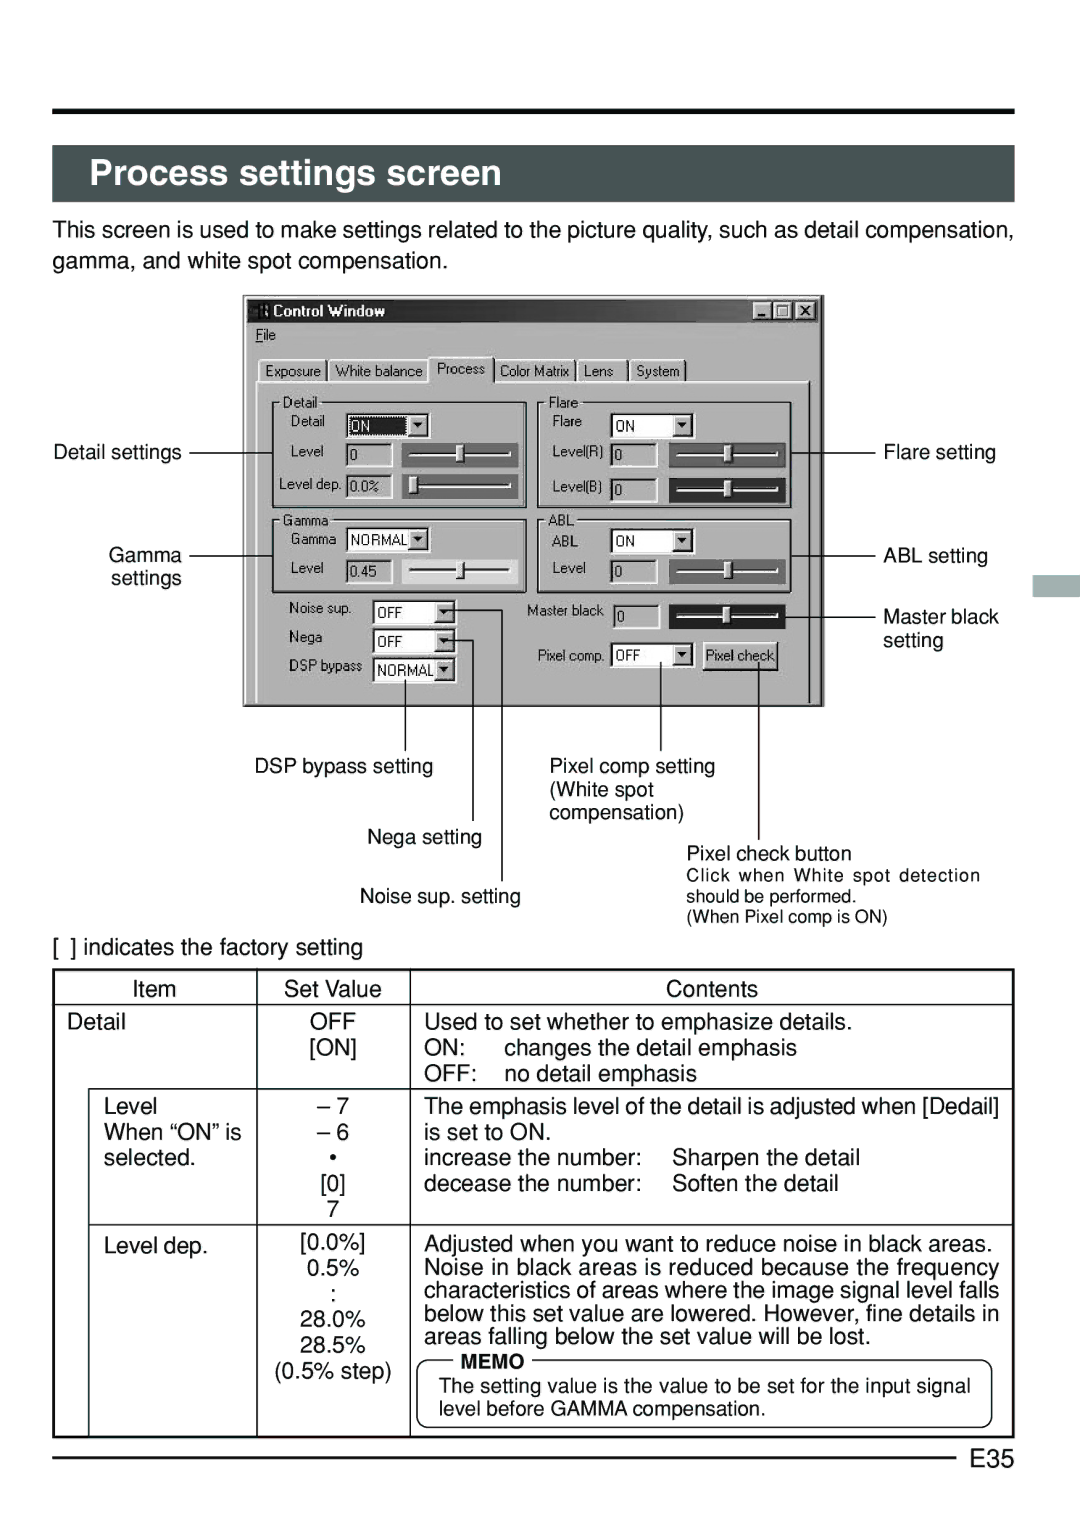 JVC KY-F75 manual Process settings screen, E35 